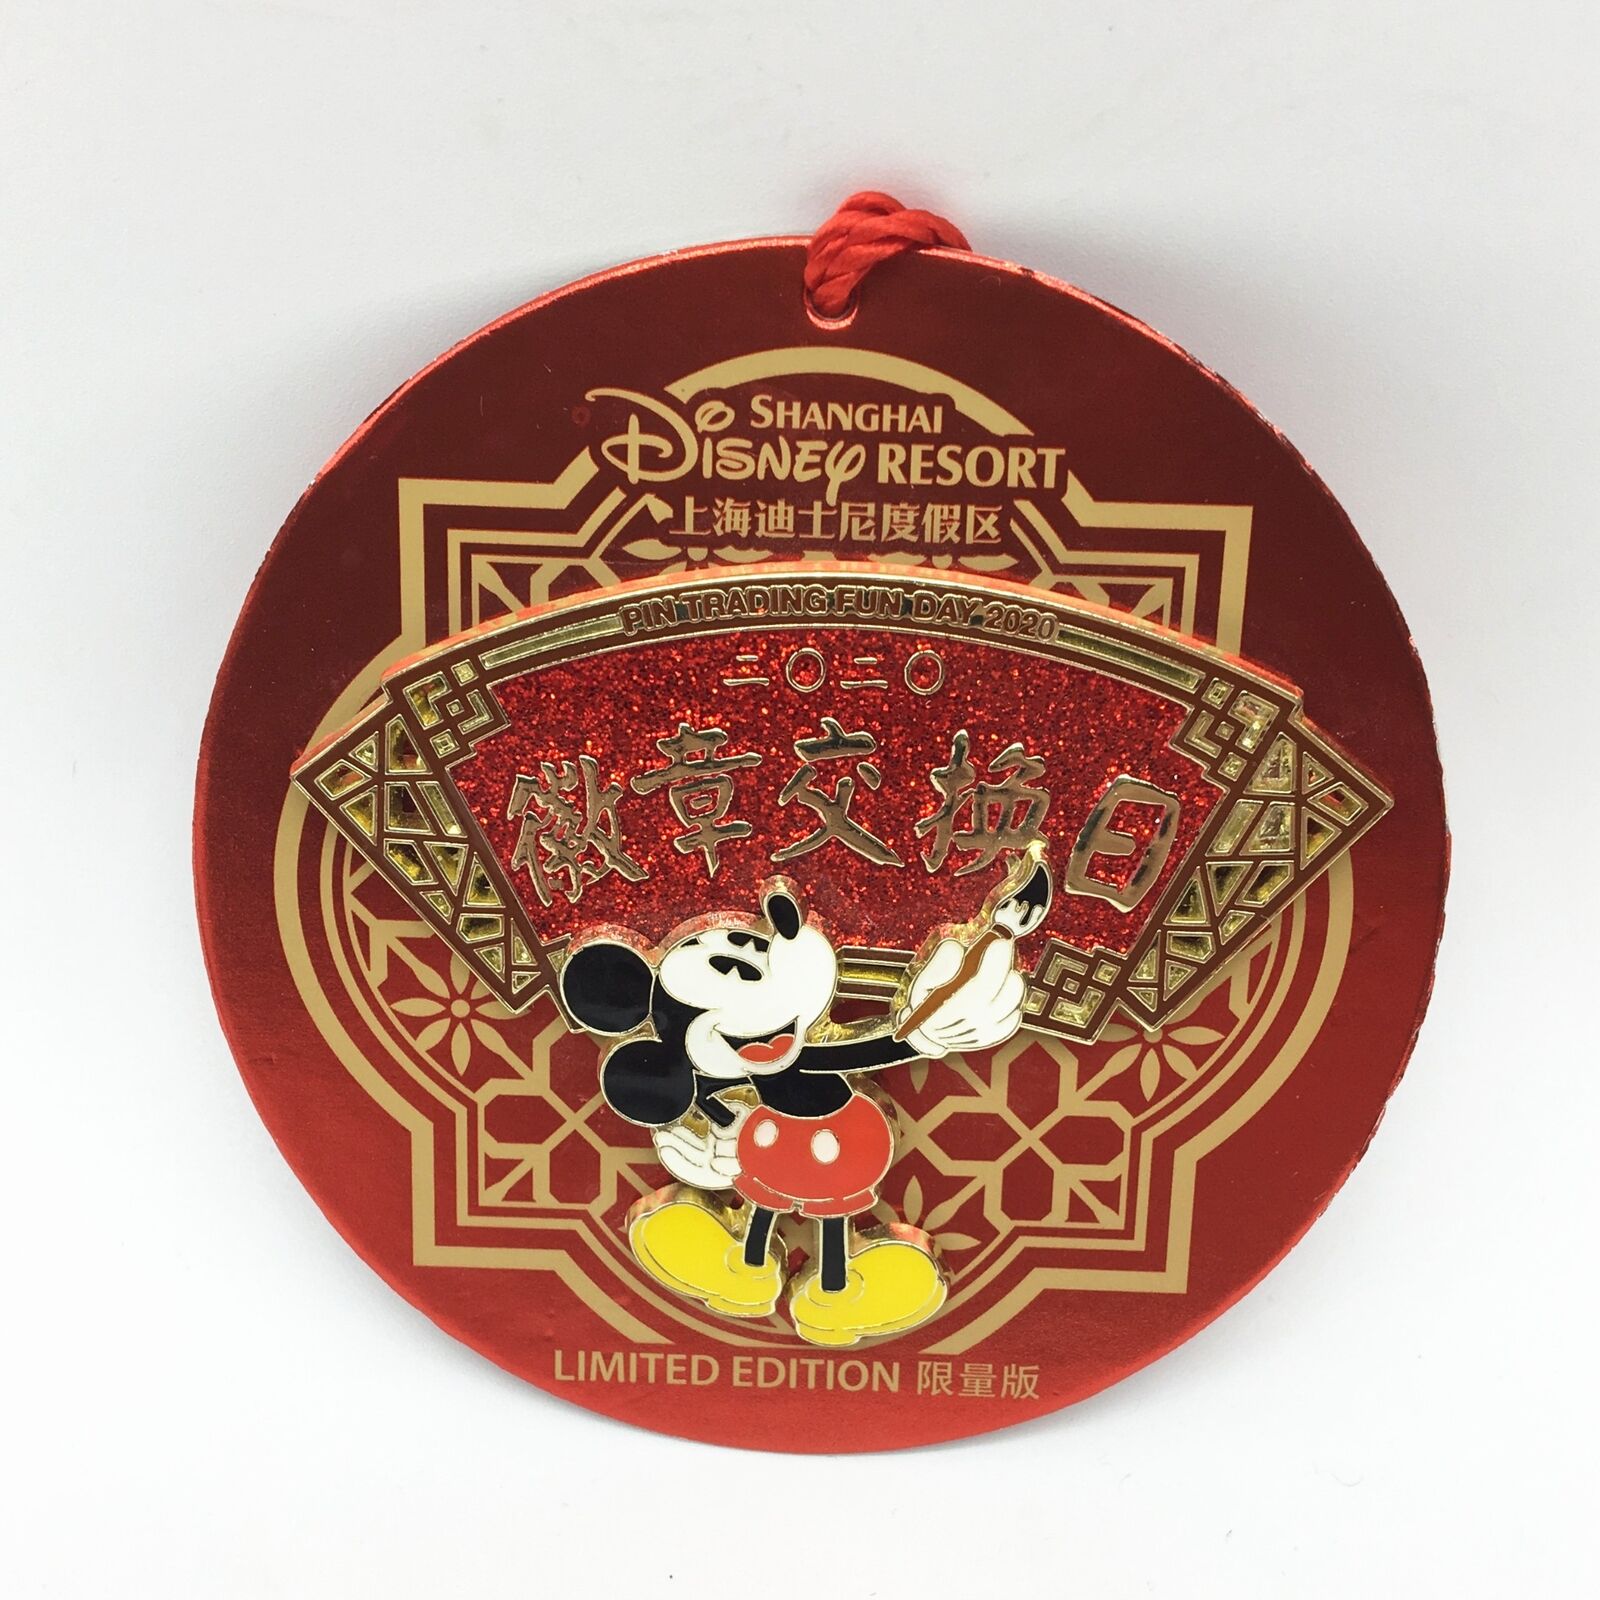 Shanghai Disney Pin SHDL 2020 Pin Trading Fun Day Mickey Mouse LE 800 New